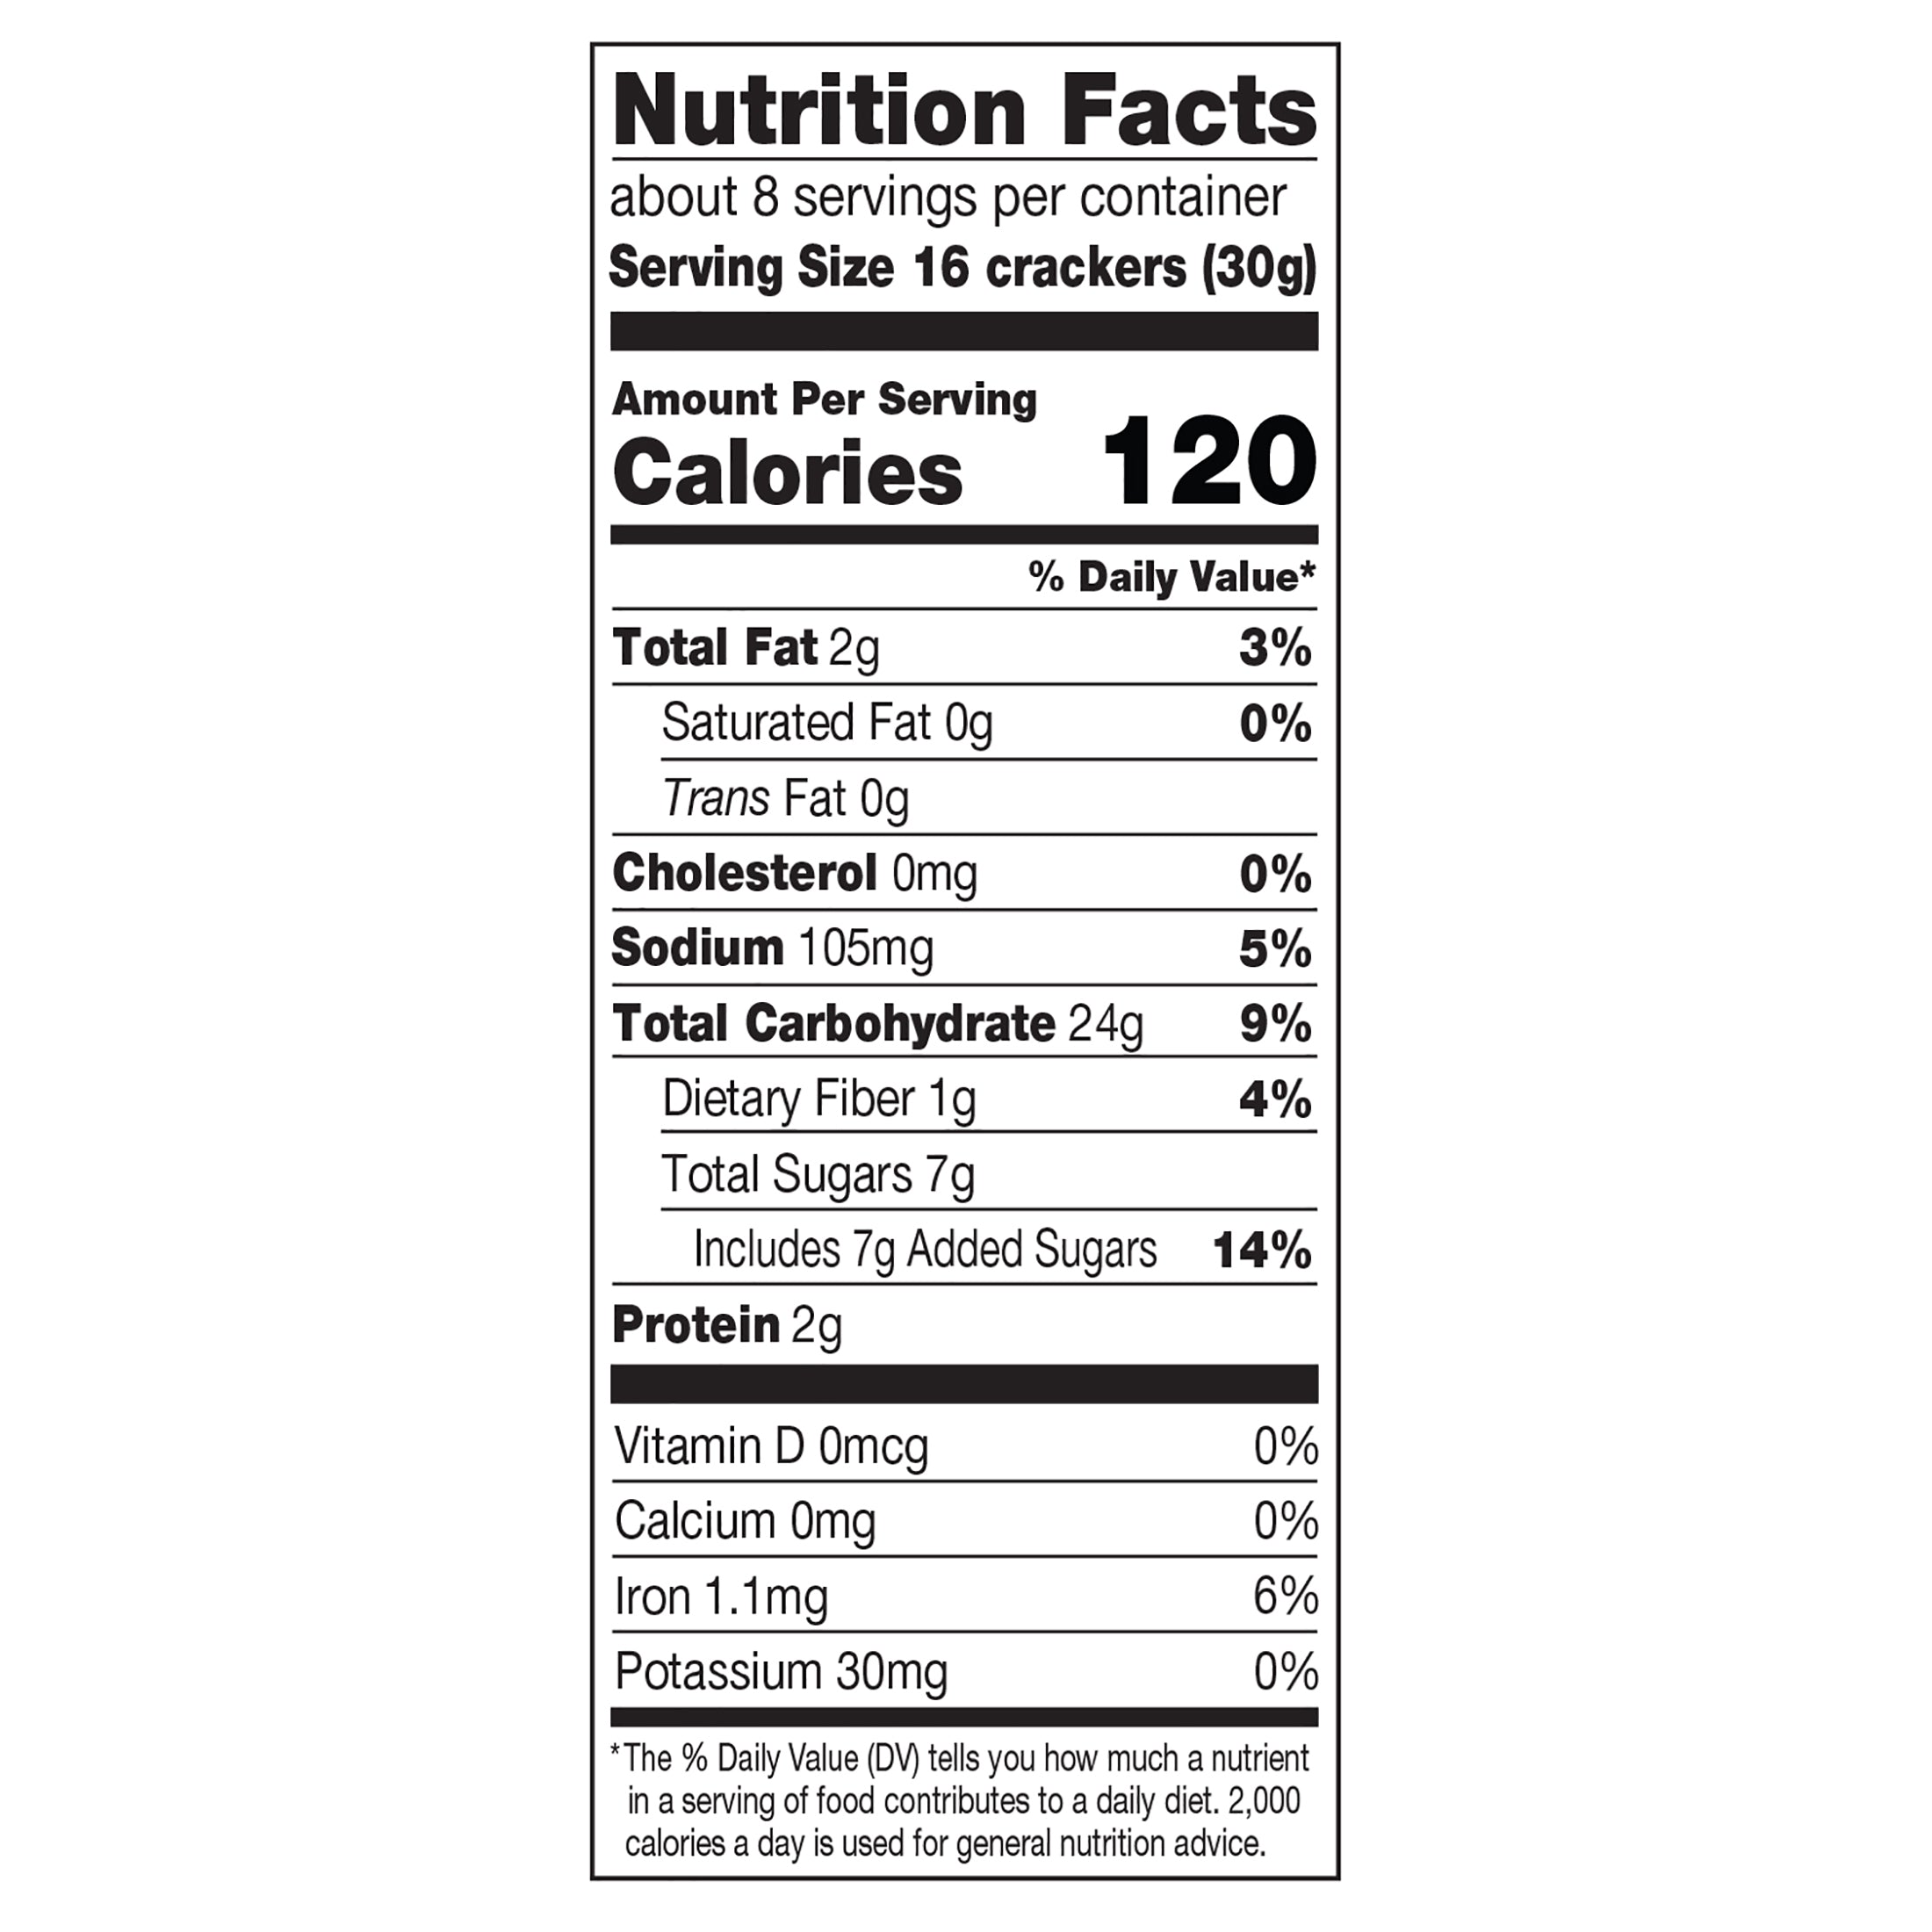 Stauffer's Animal Crackers Original 8oz Bag nutritional facts